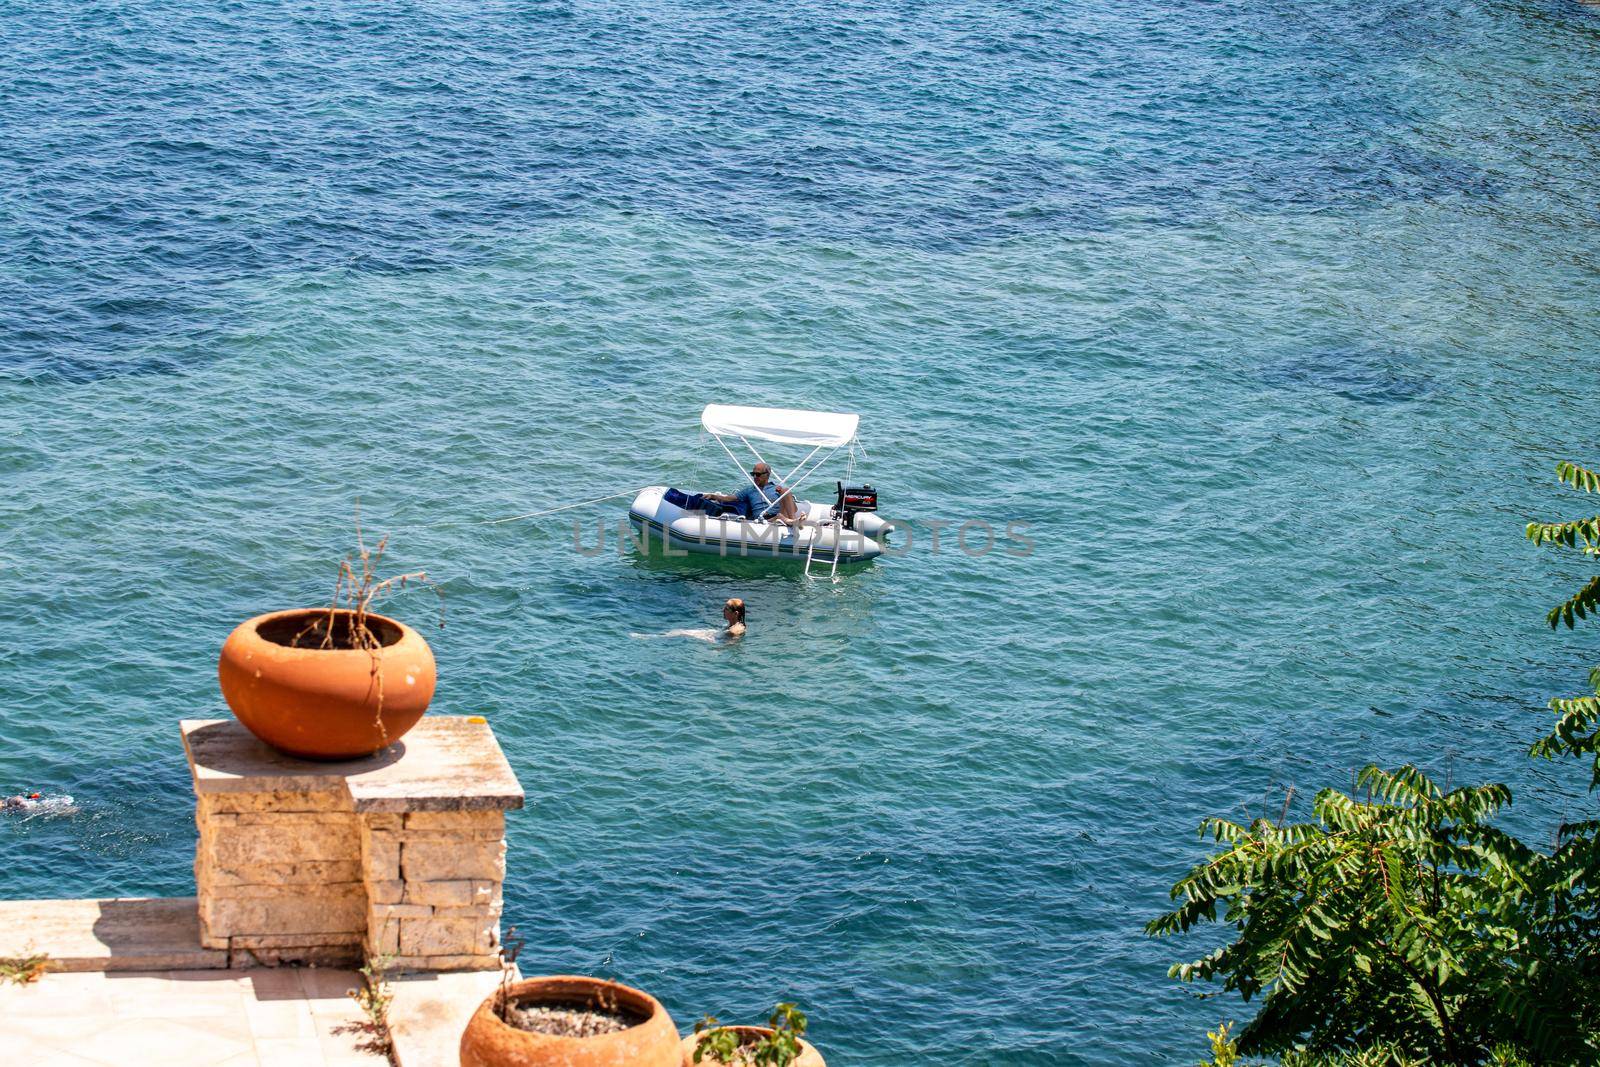 porto santo stefano,italy july 24 2021:small boats on the sea with bathers